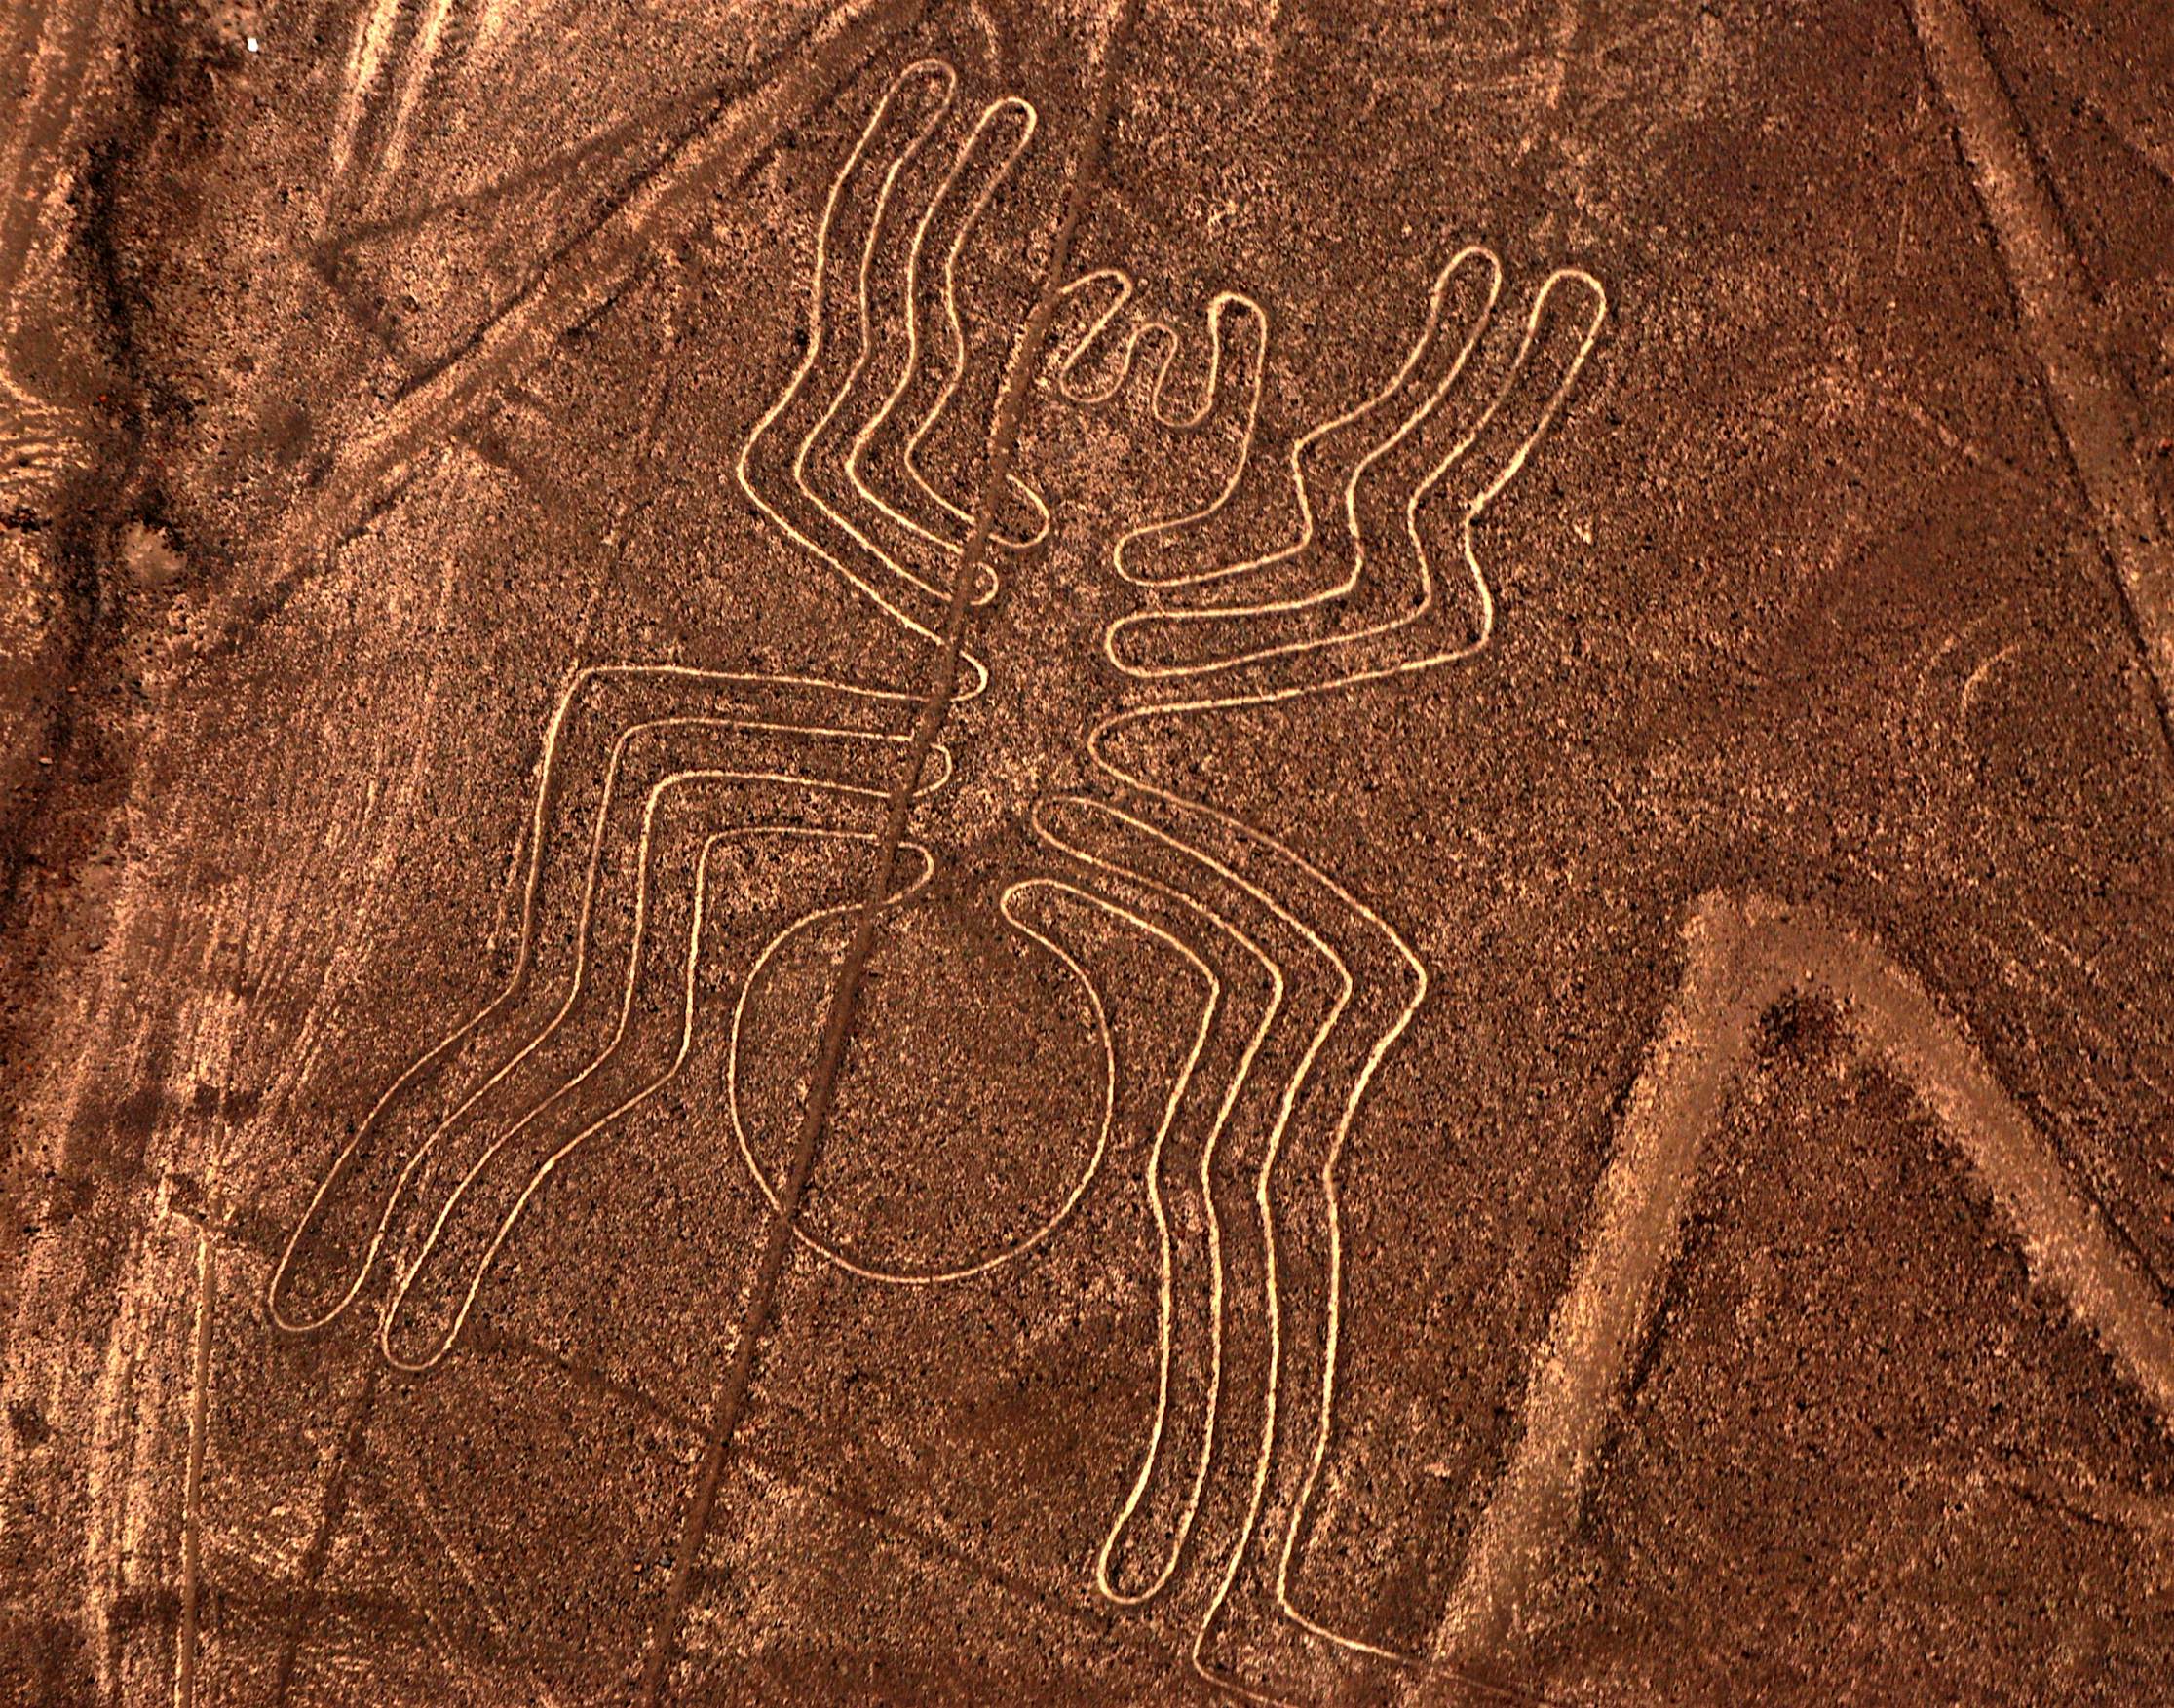 nazca lines visit